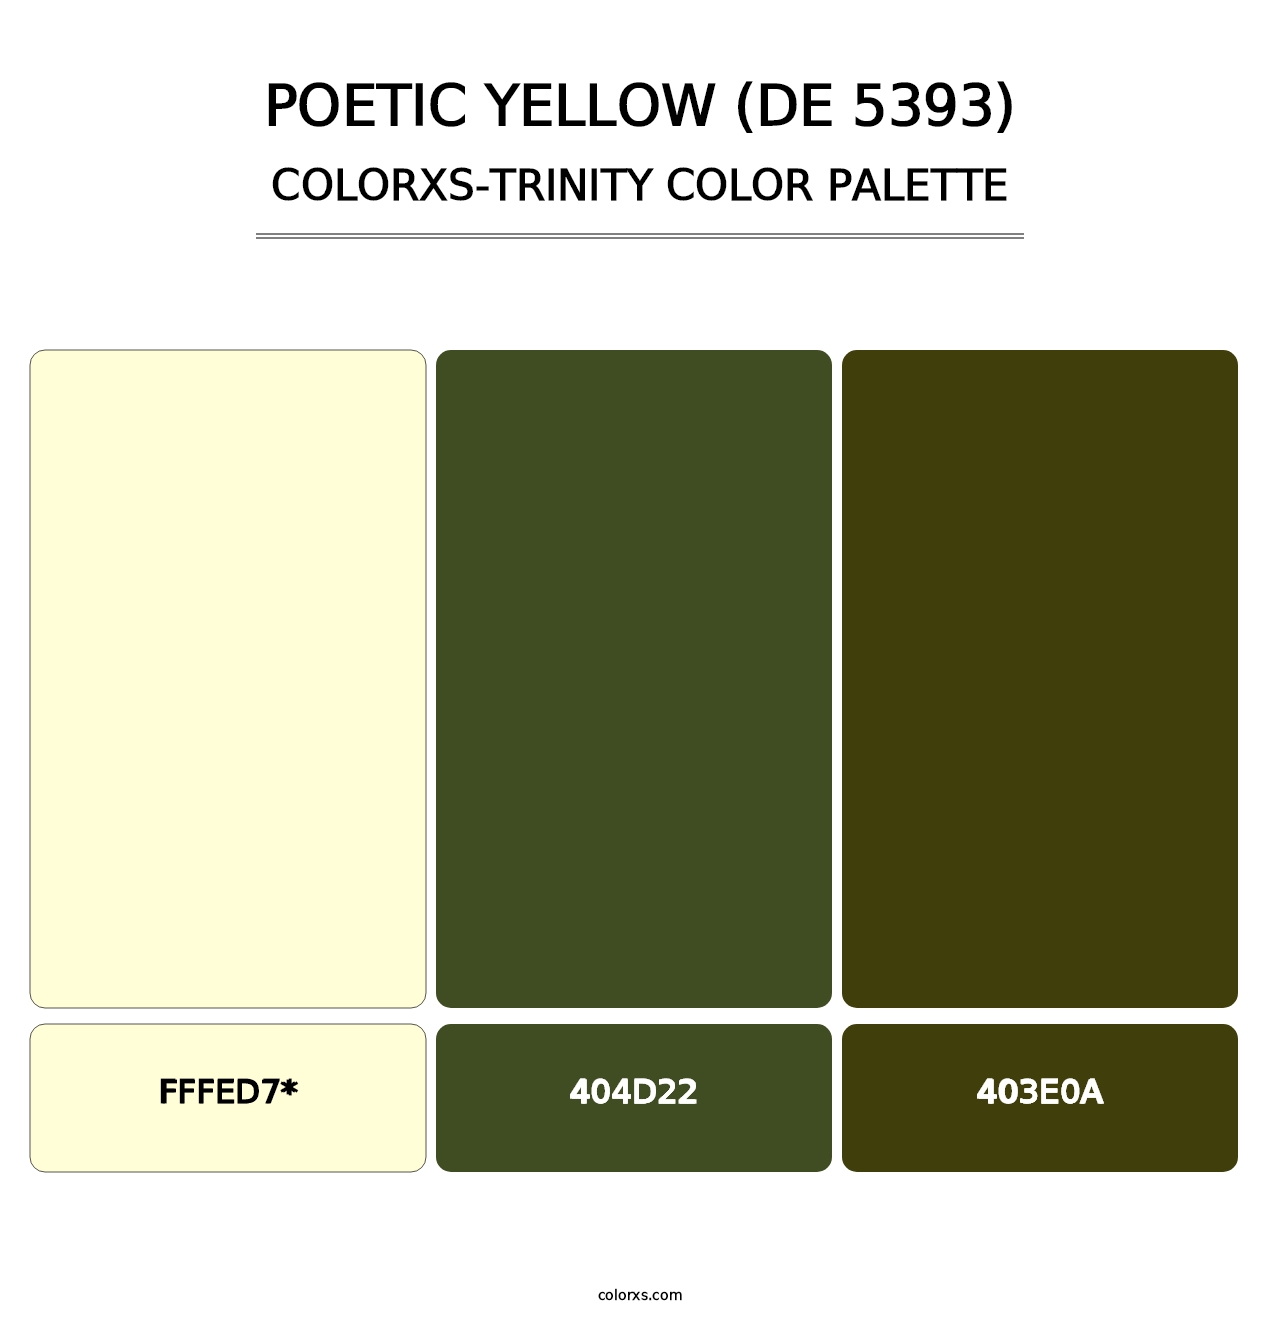 Poetic Yellow (DE 5393) - Colorxs Trinity Palette